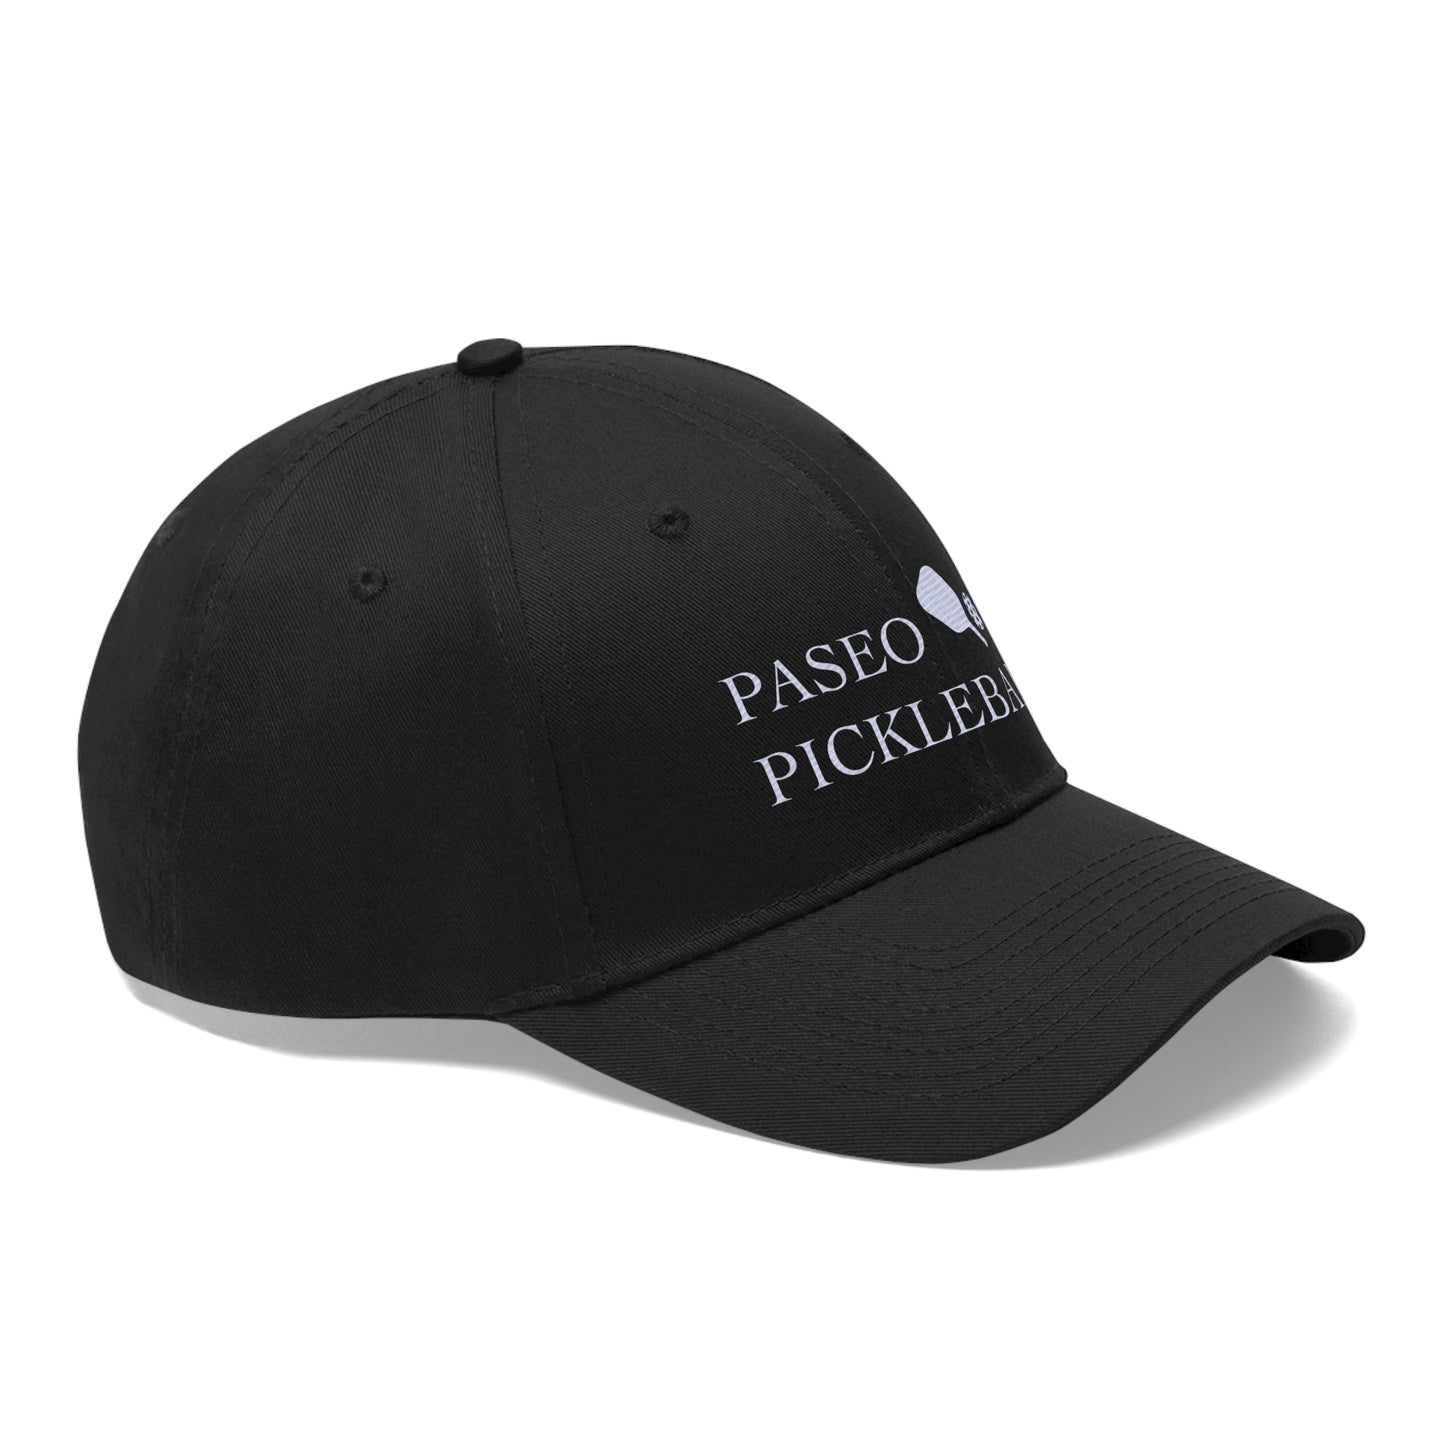 Club Pickleball Hat